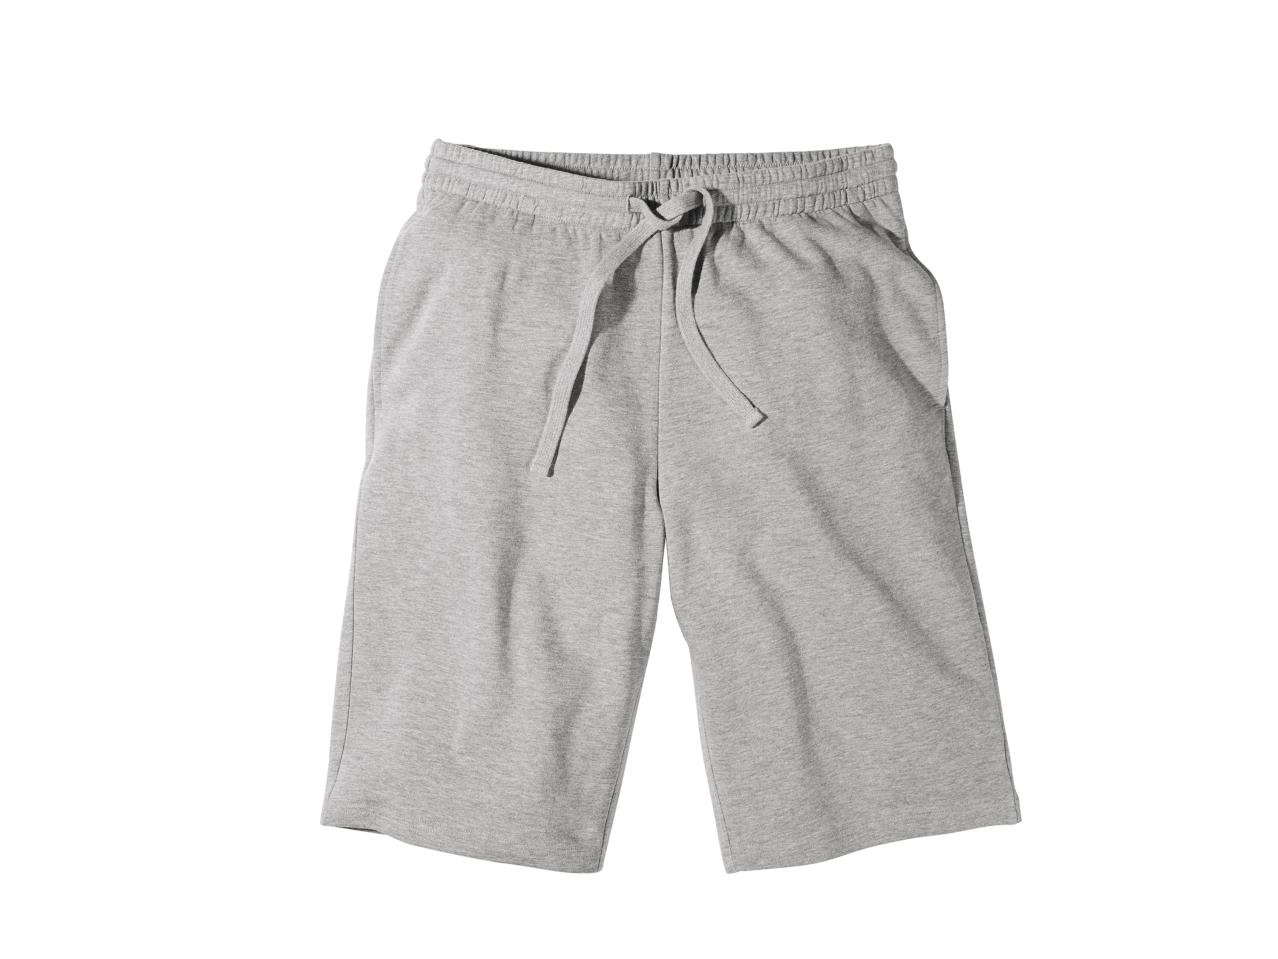 Livergy Men's Shorts1